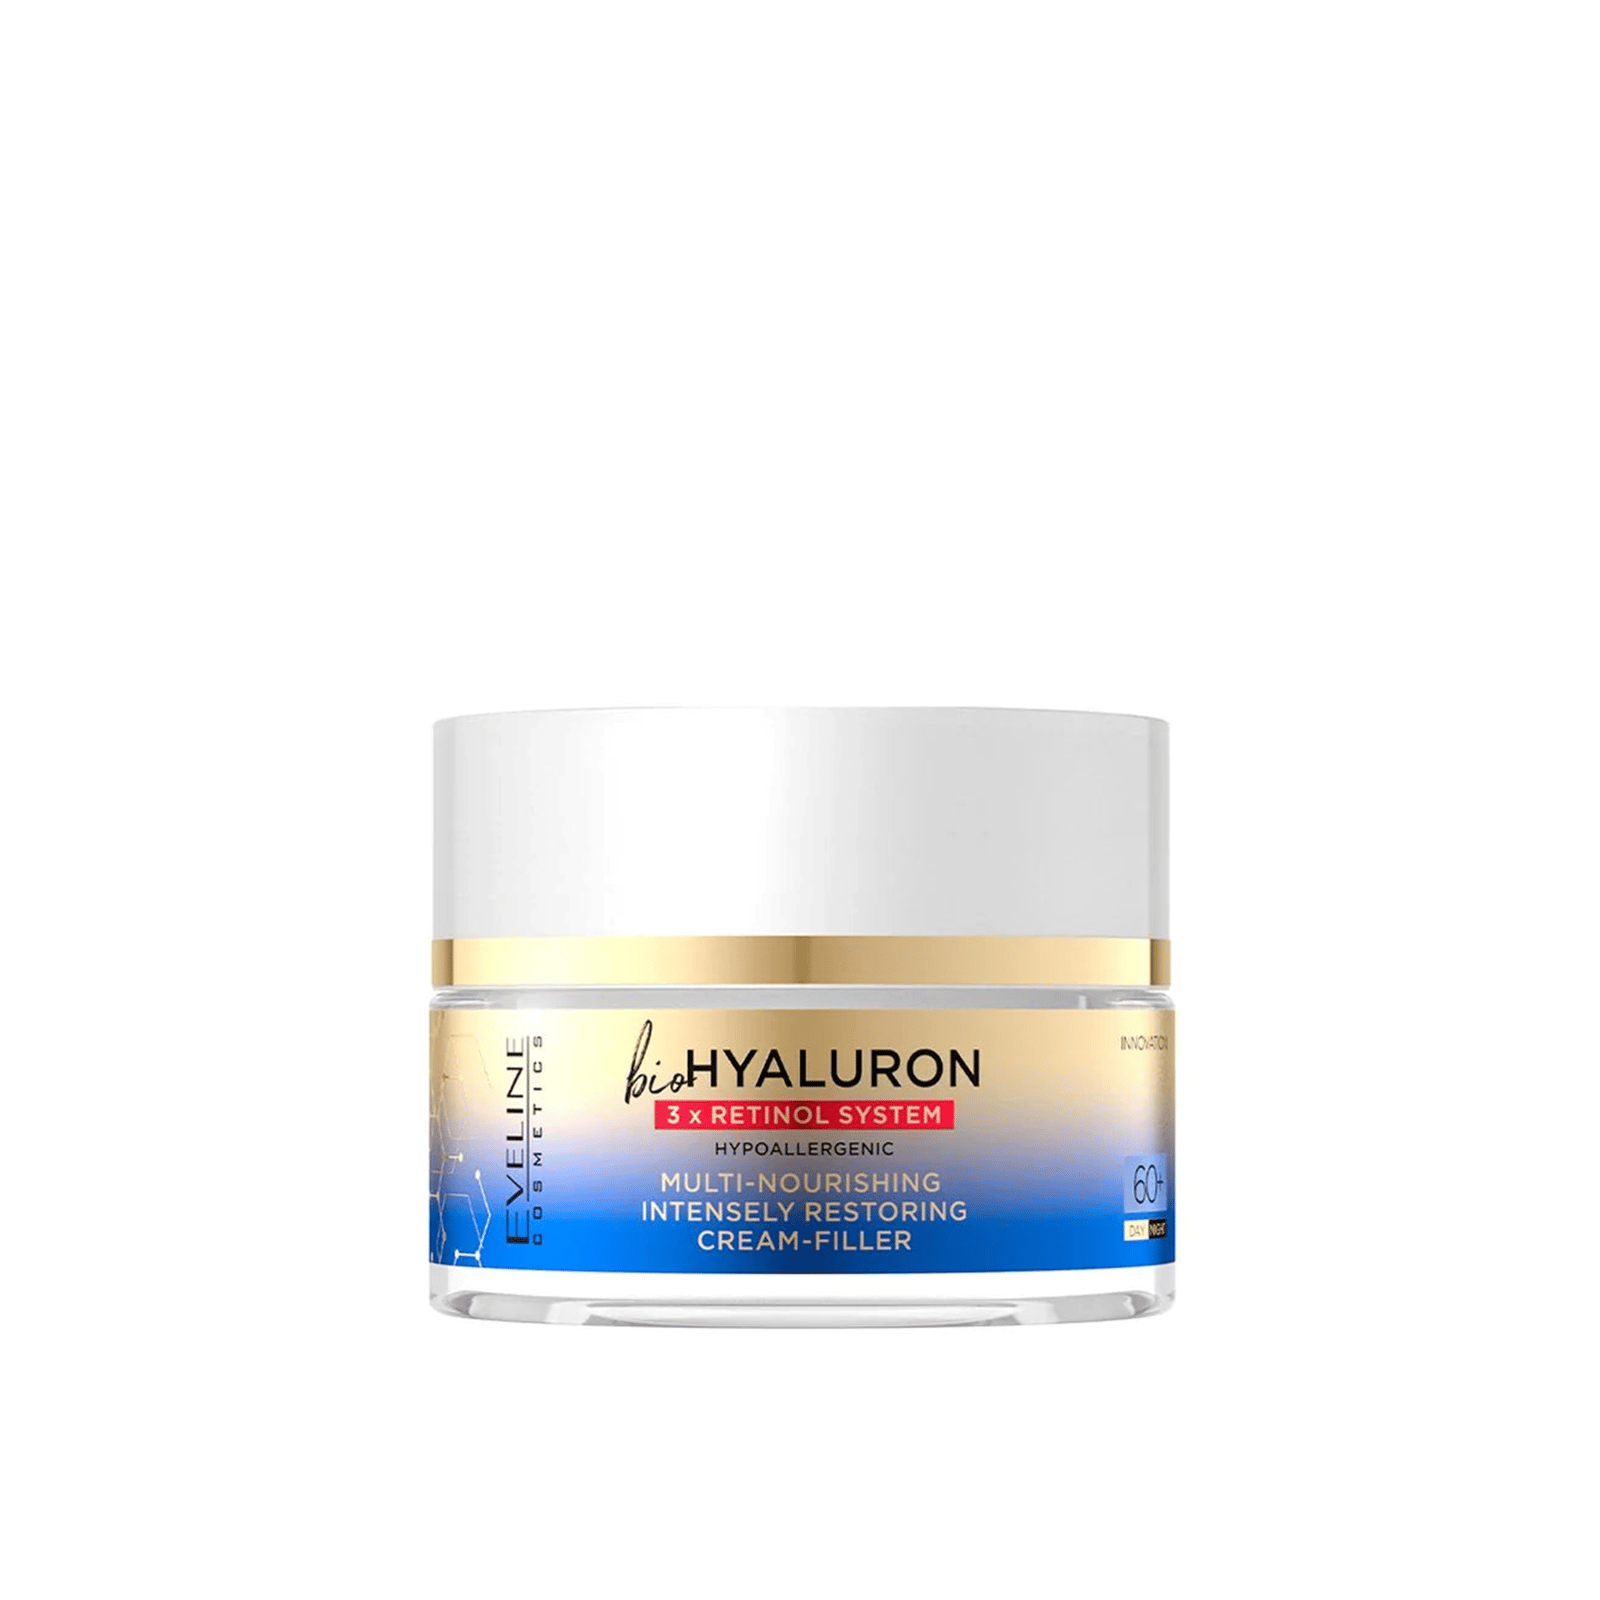 Eveline BioHyaluron 3x Retinol System 60+ Multi Nourishing Intensely Restoring Cream 50ml